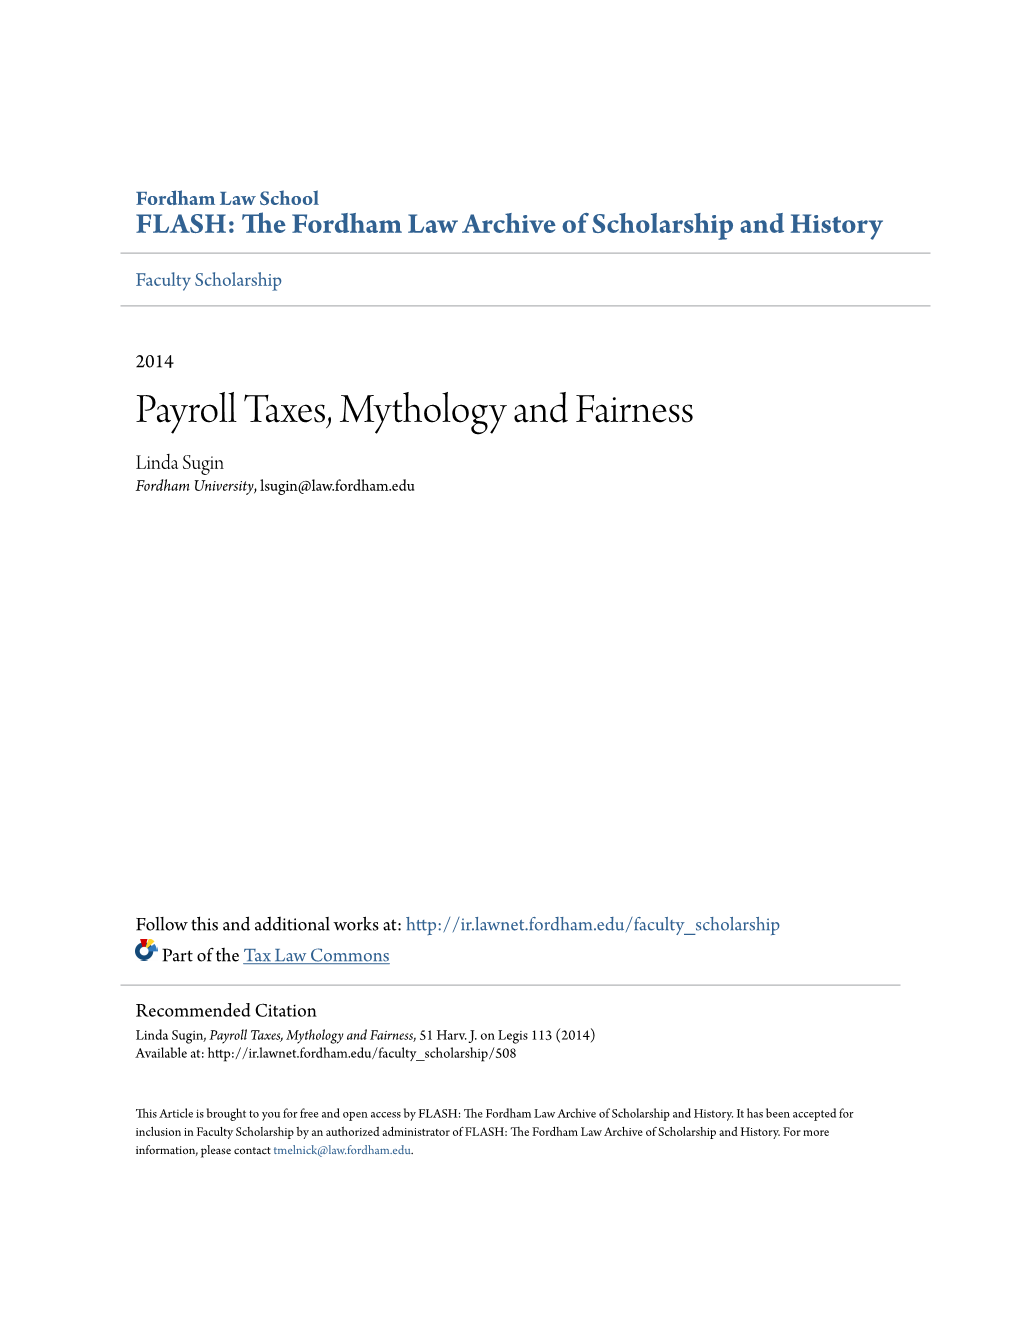 Payroll Taxes, Mythology and Fairness Linda Sugin Fordham University, Lsugin@Law.Fordham.Edu